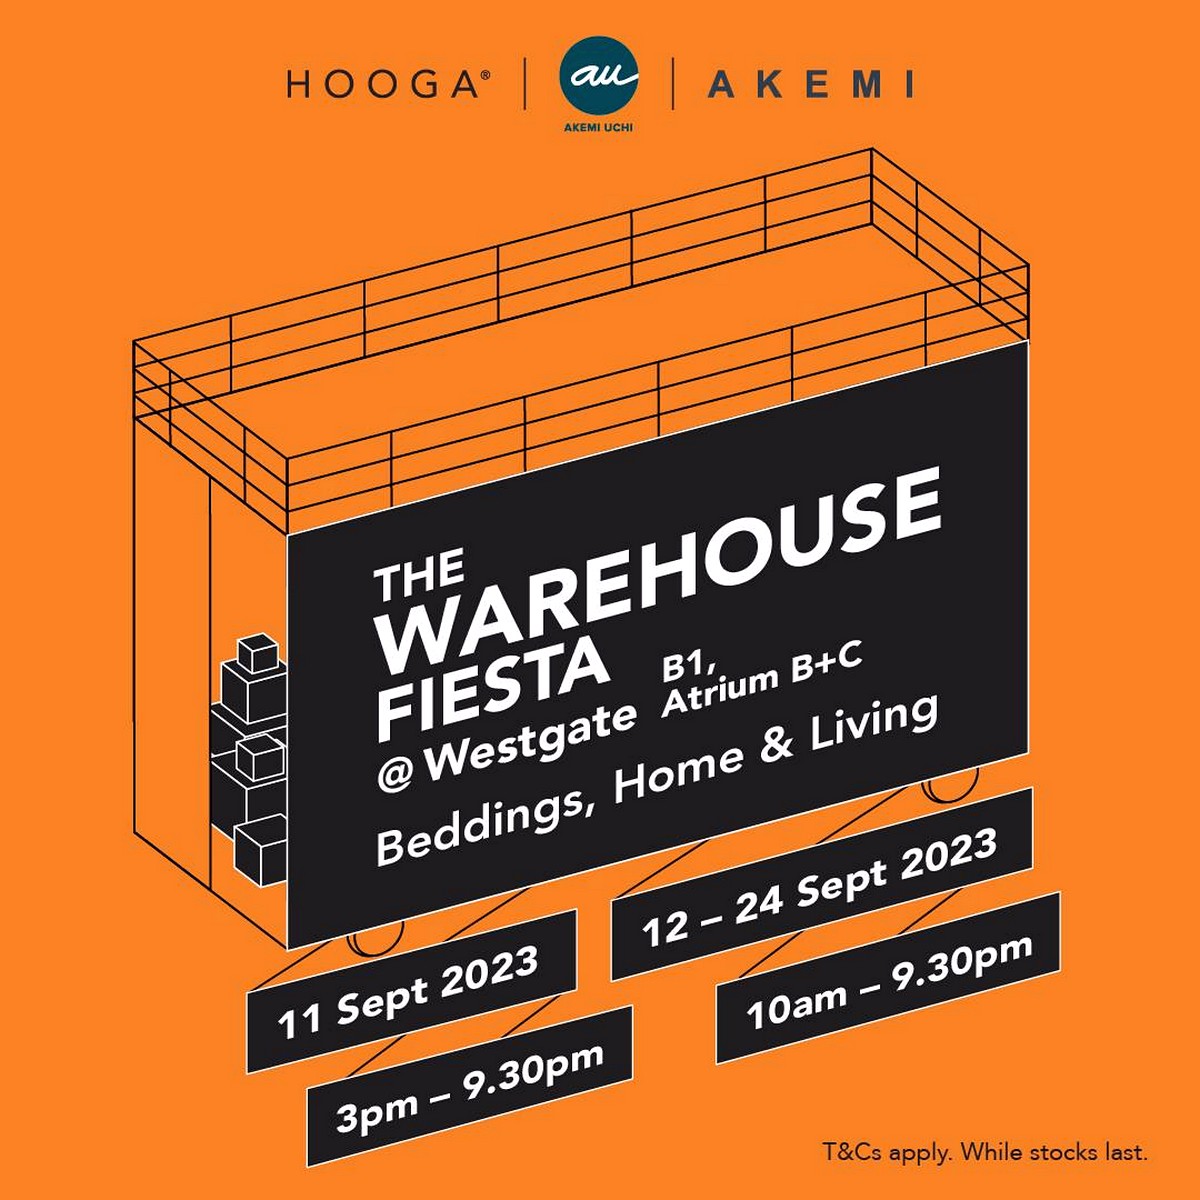 Westgate-Singapore-Warehouse-Sale-01-Hooga-Akemi-Uchi-Beddings-2023 11-24 Sept 2023: HOOGA Warehouse Sale: The WAREHOUSE Fiesta! Up to 70% OFF